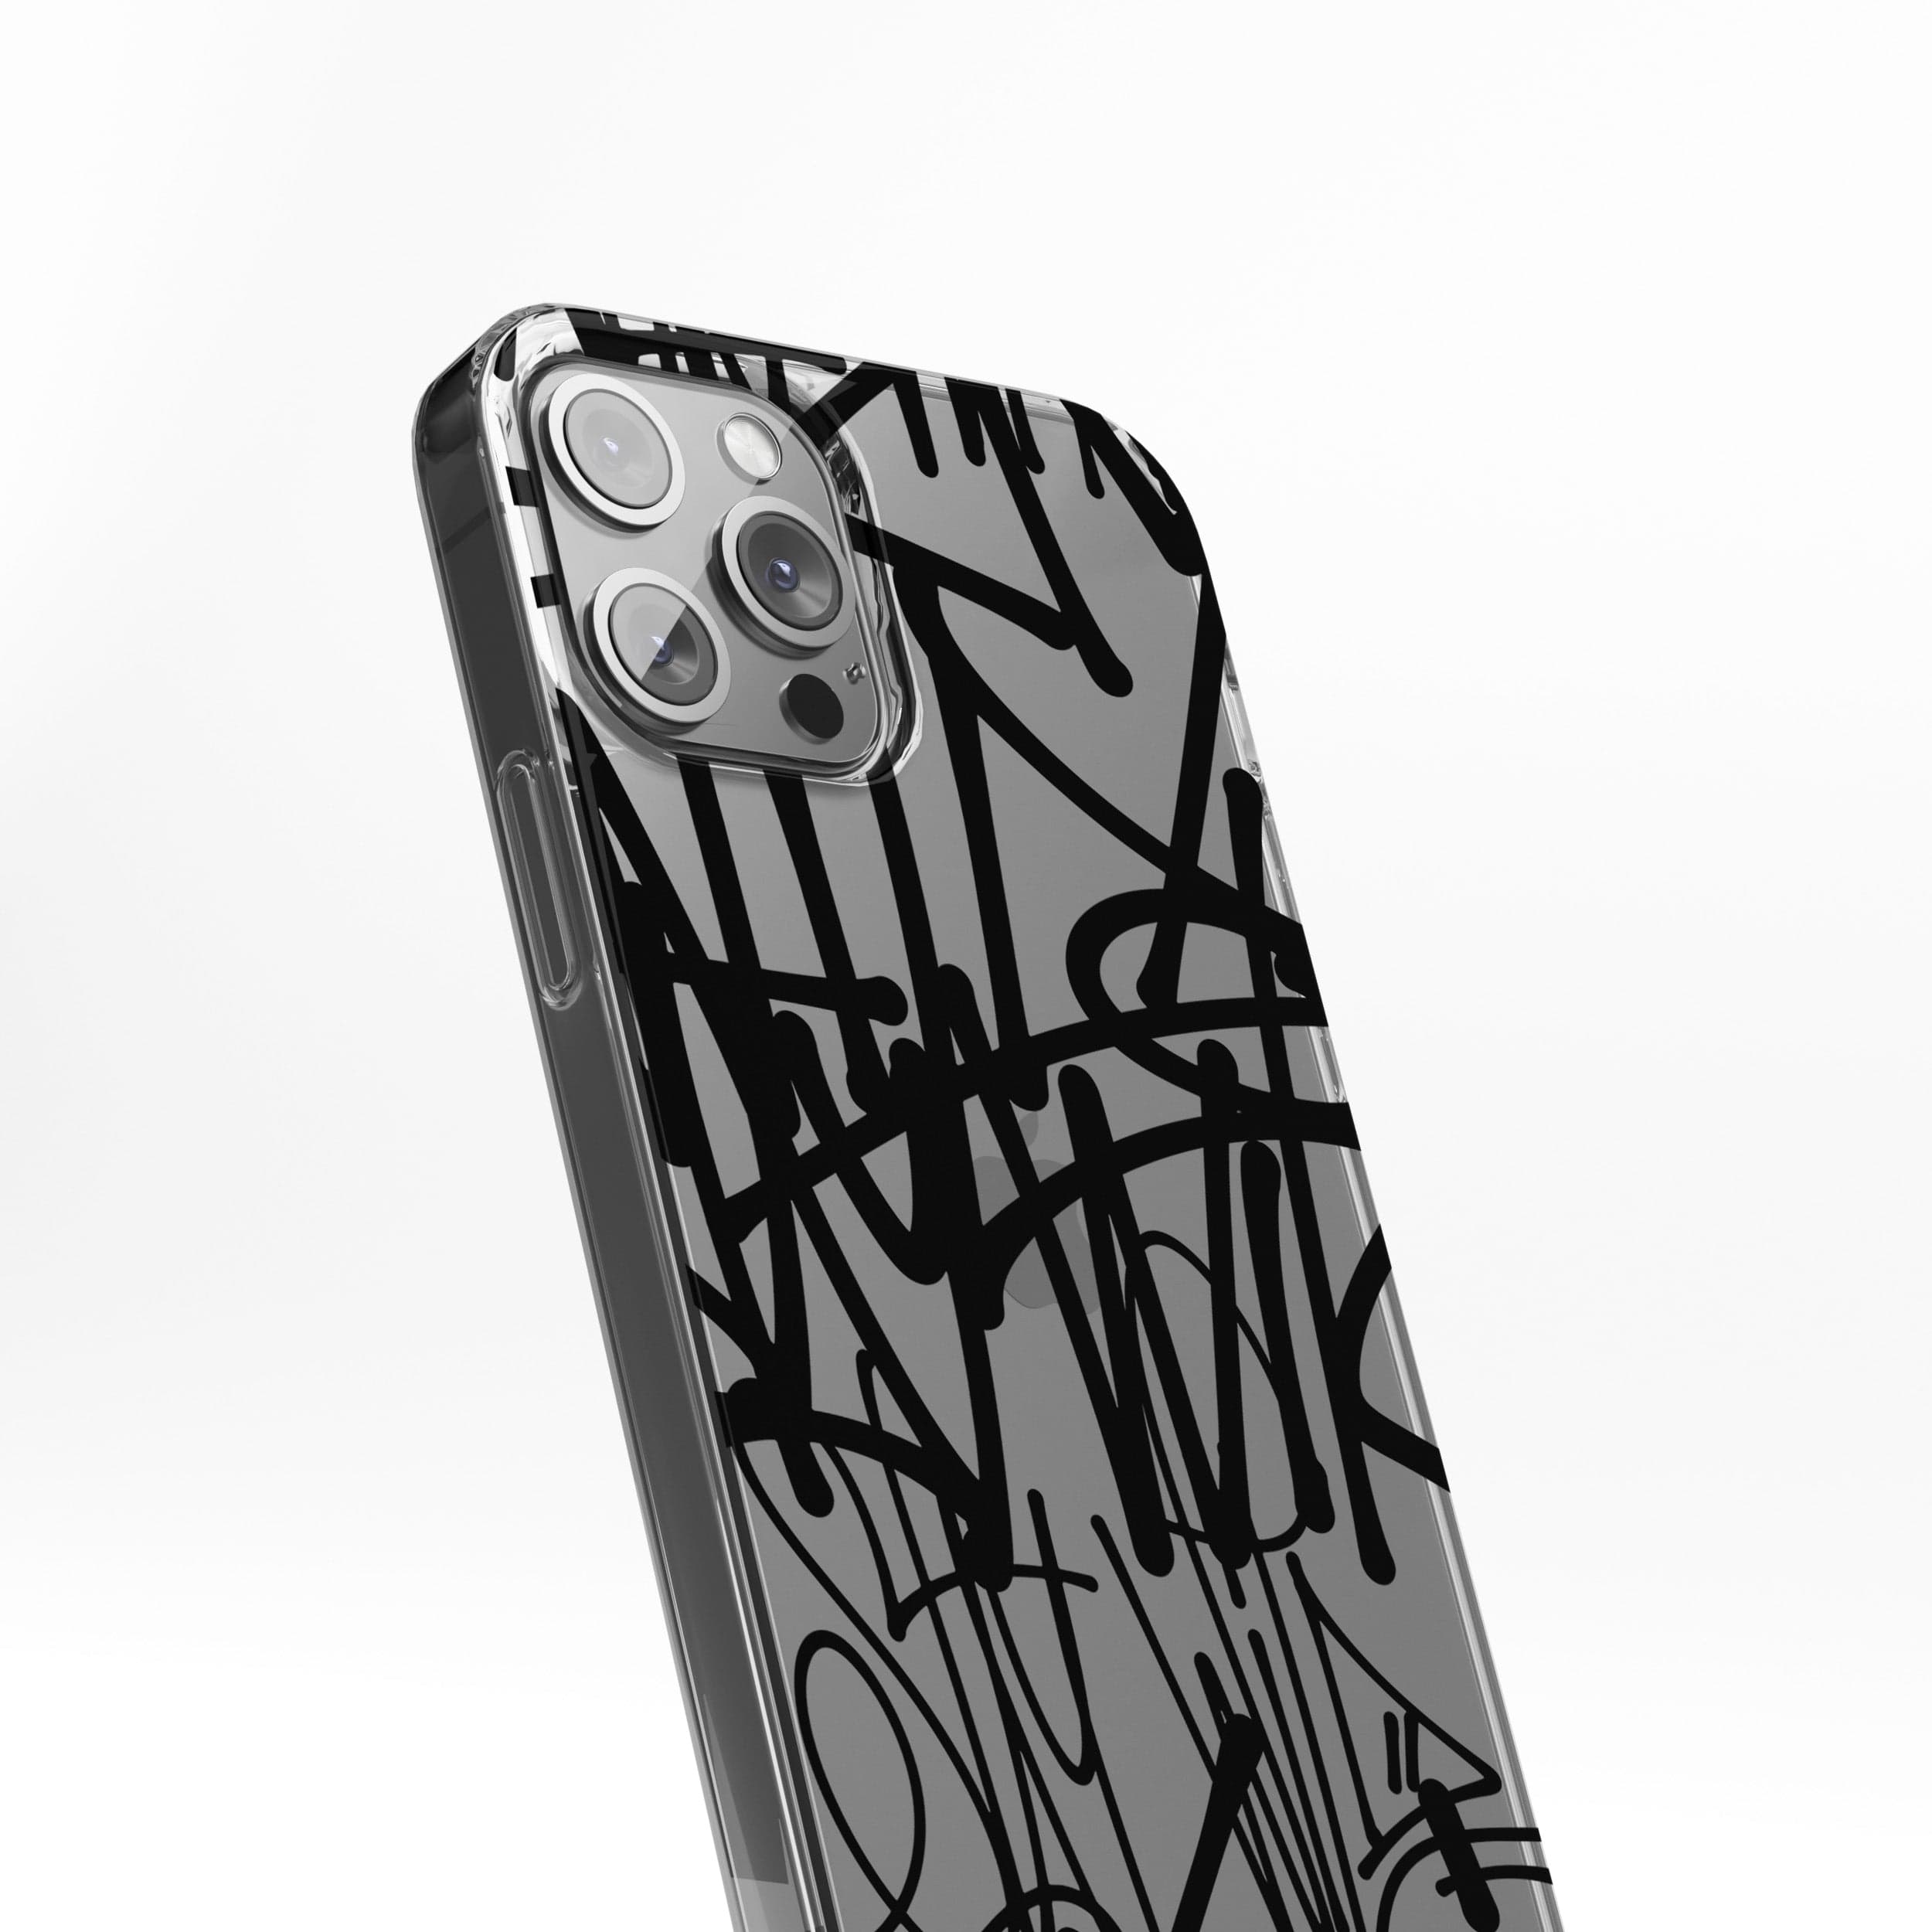 Transparent silicone case "Black graffiti 3"